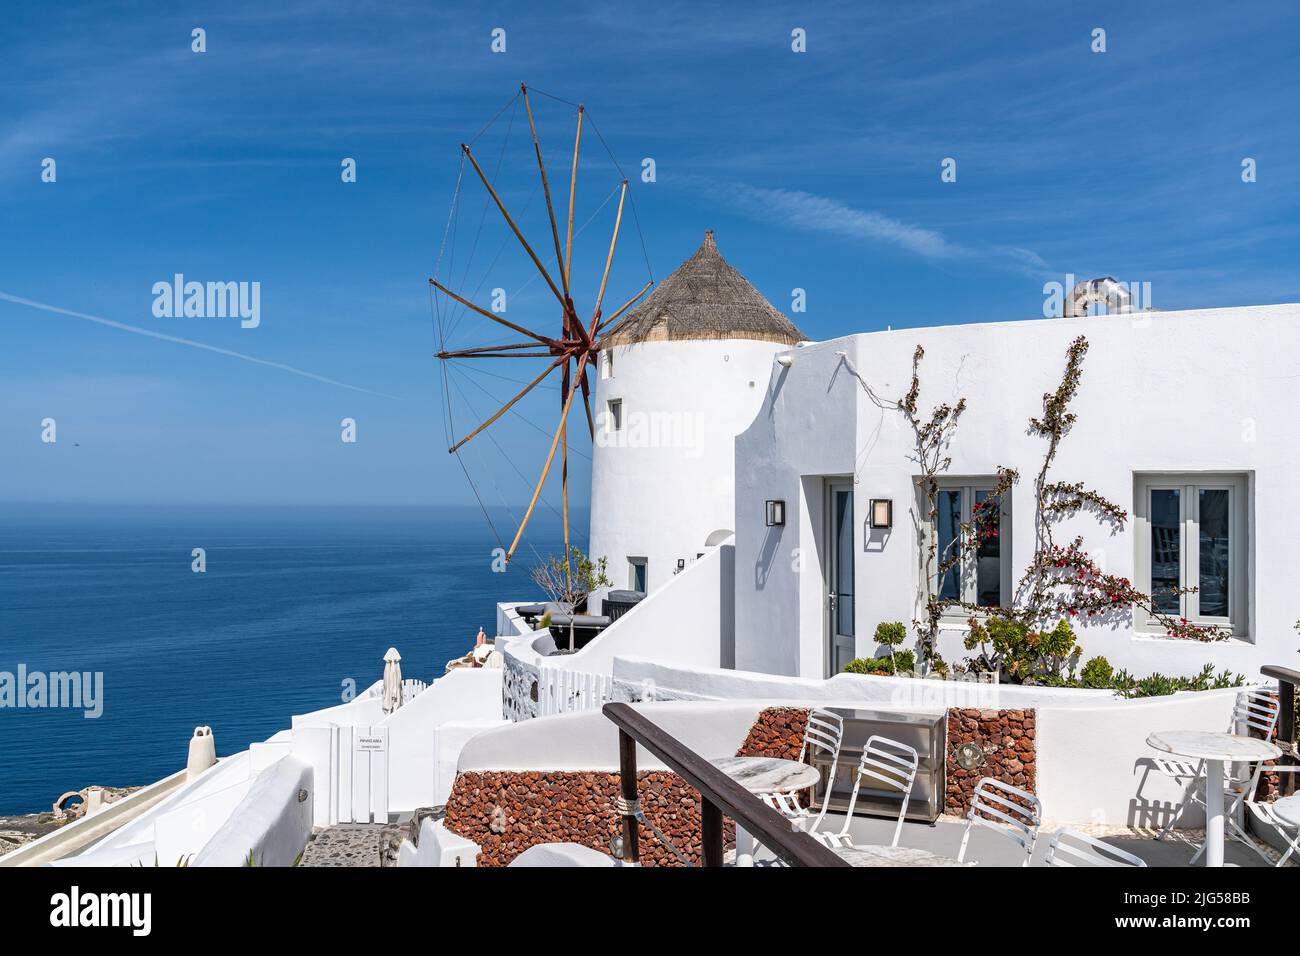 Iconic white windmill in Oia overlooking the Aegean Sea, Santorini, Greece Stock Photo